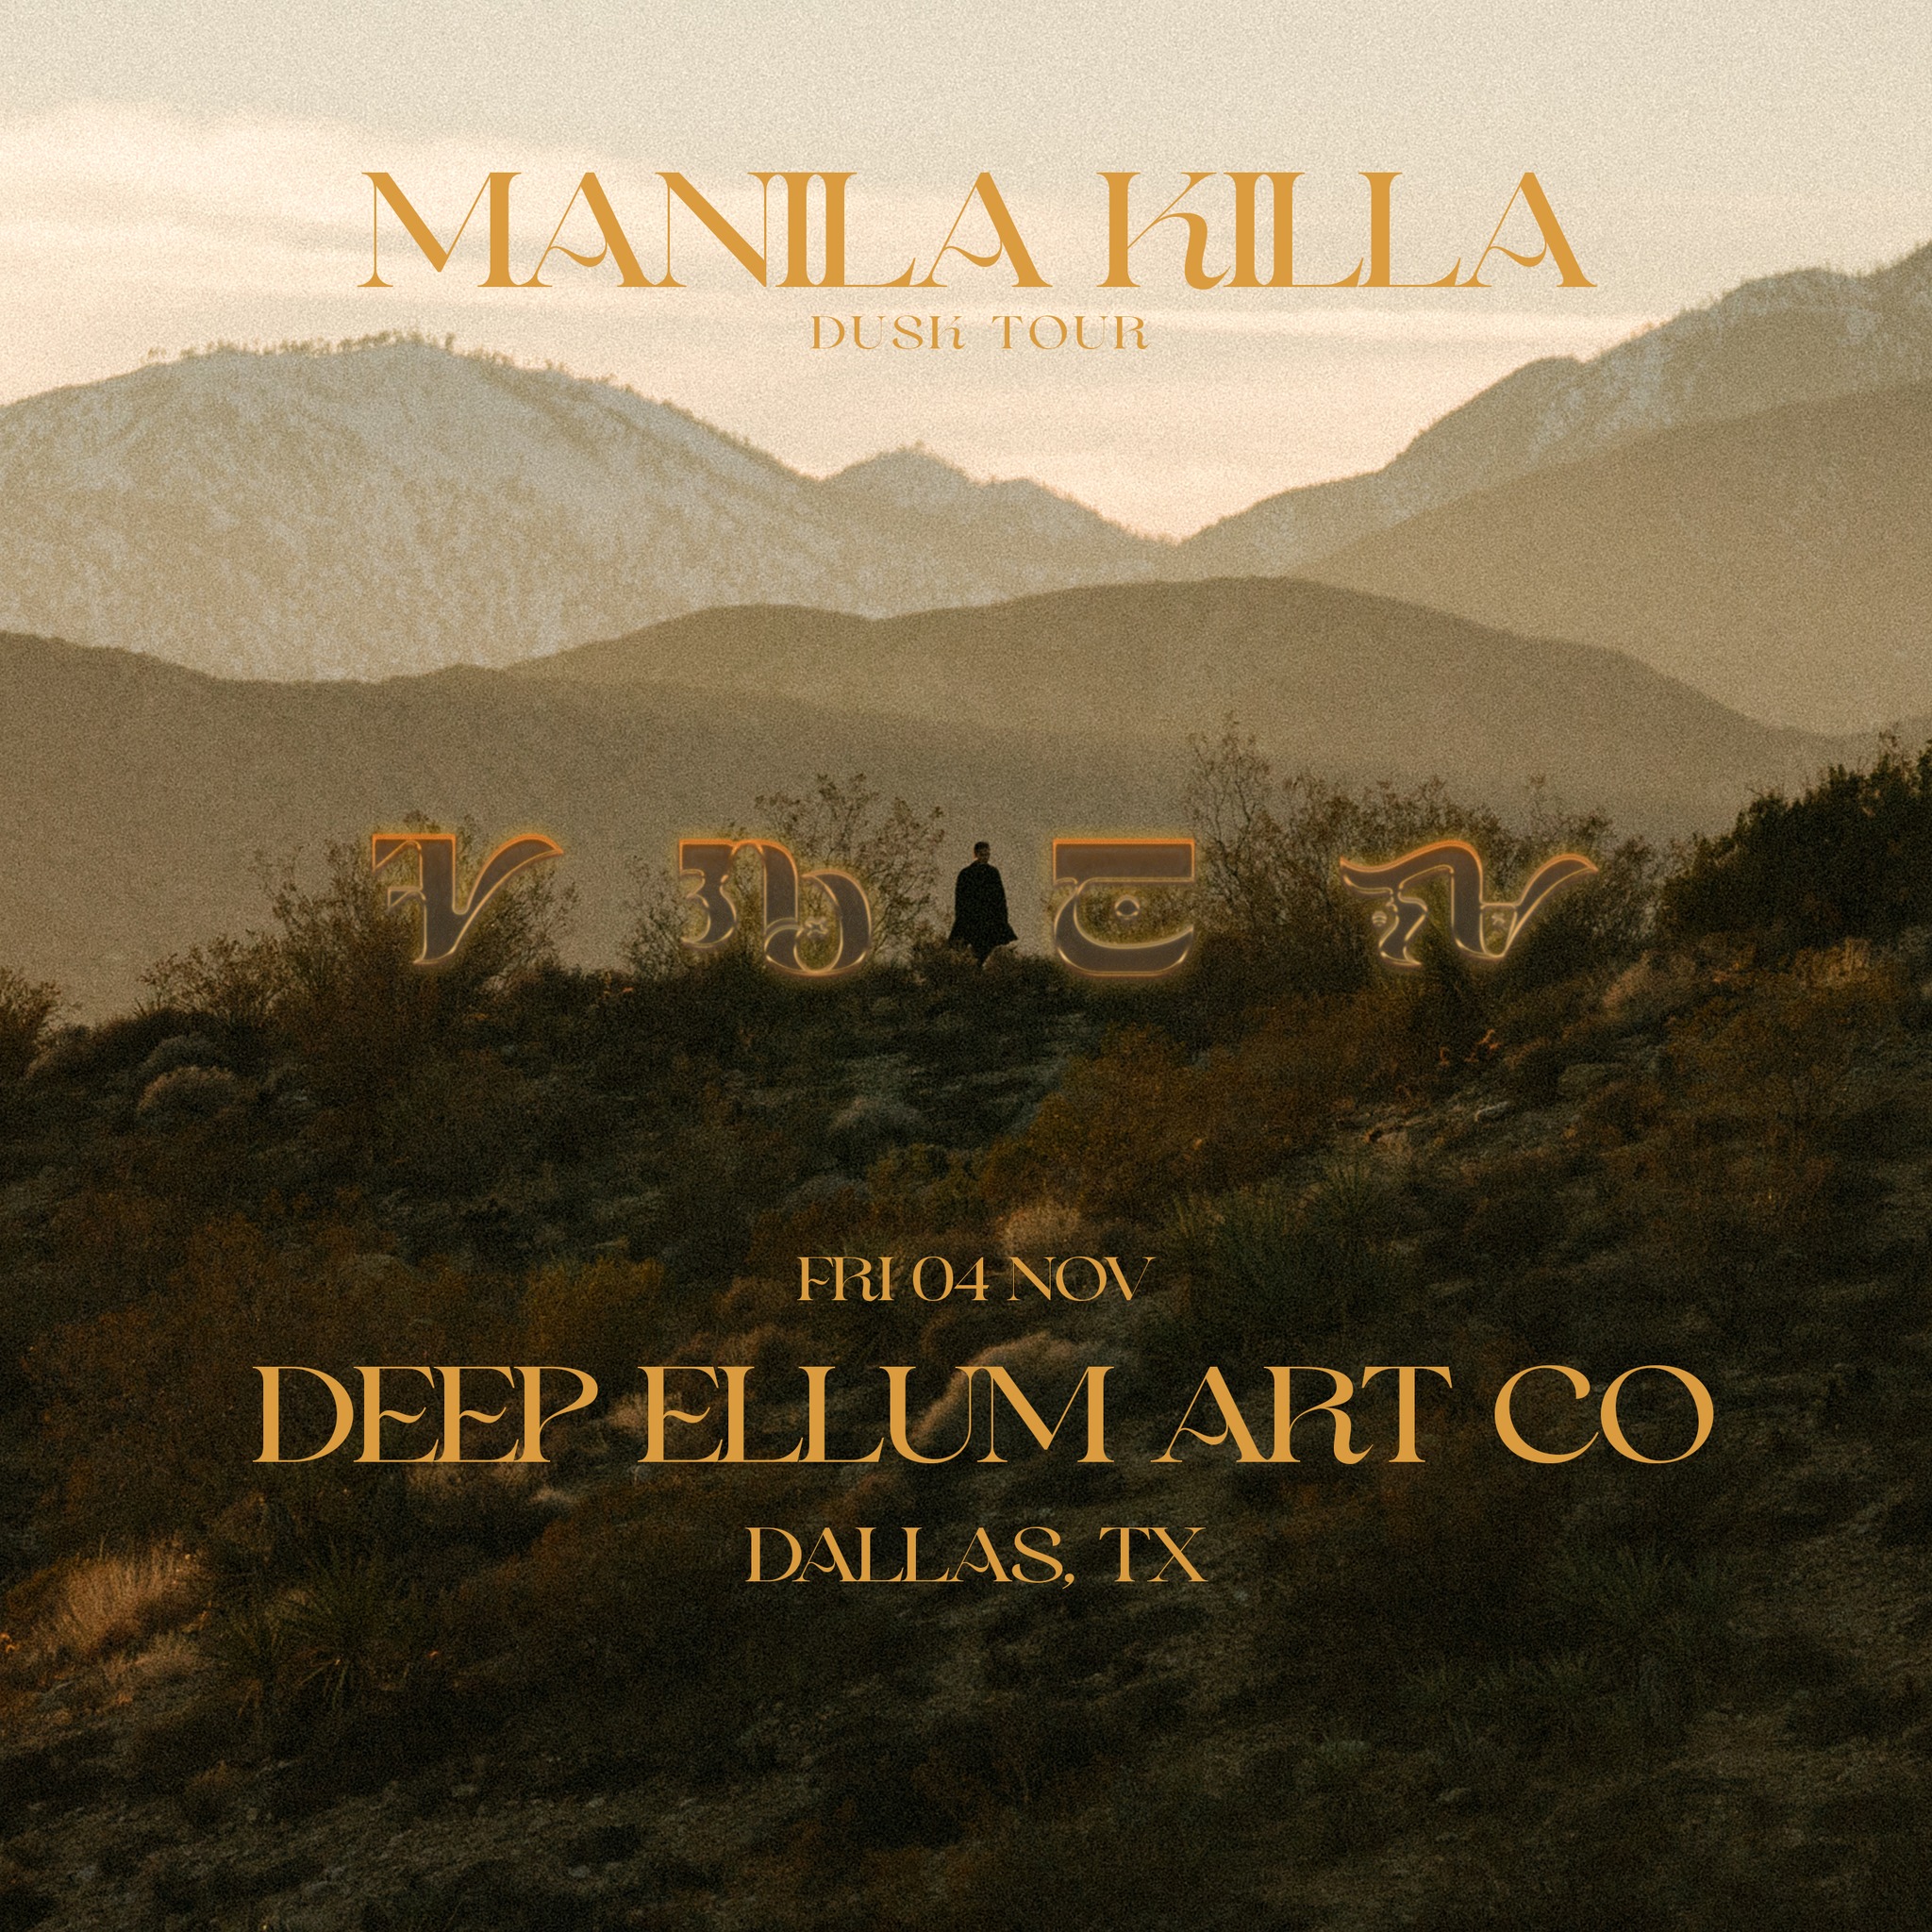 Mark my Words Presents Manila Killa at Deep Ellum Art Co November fourth